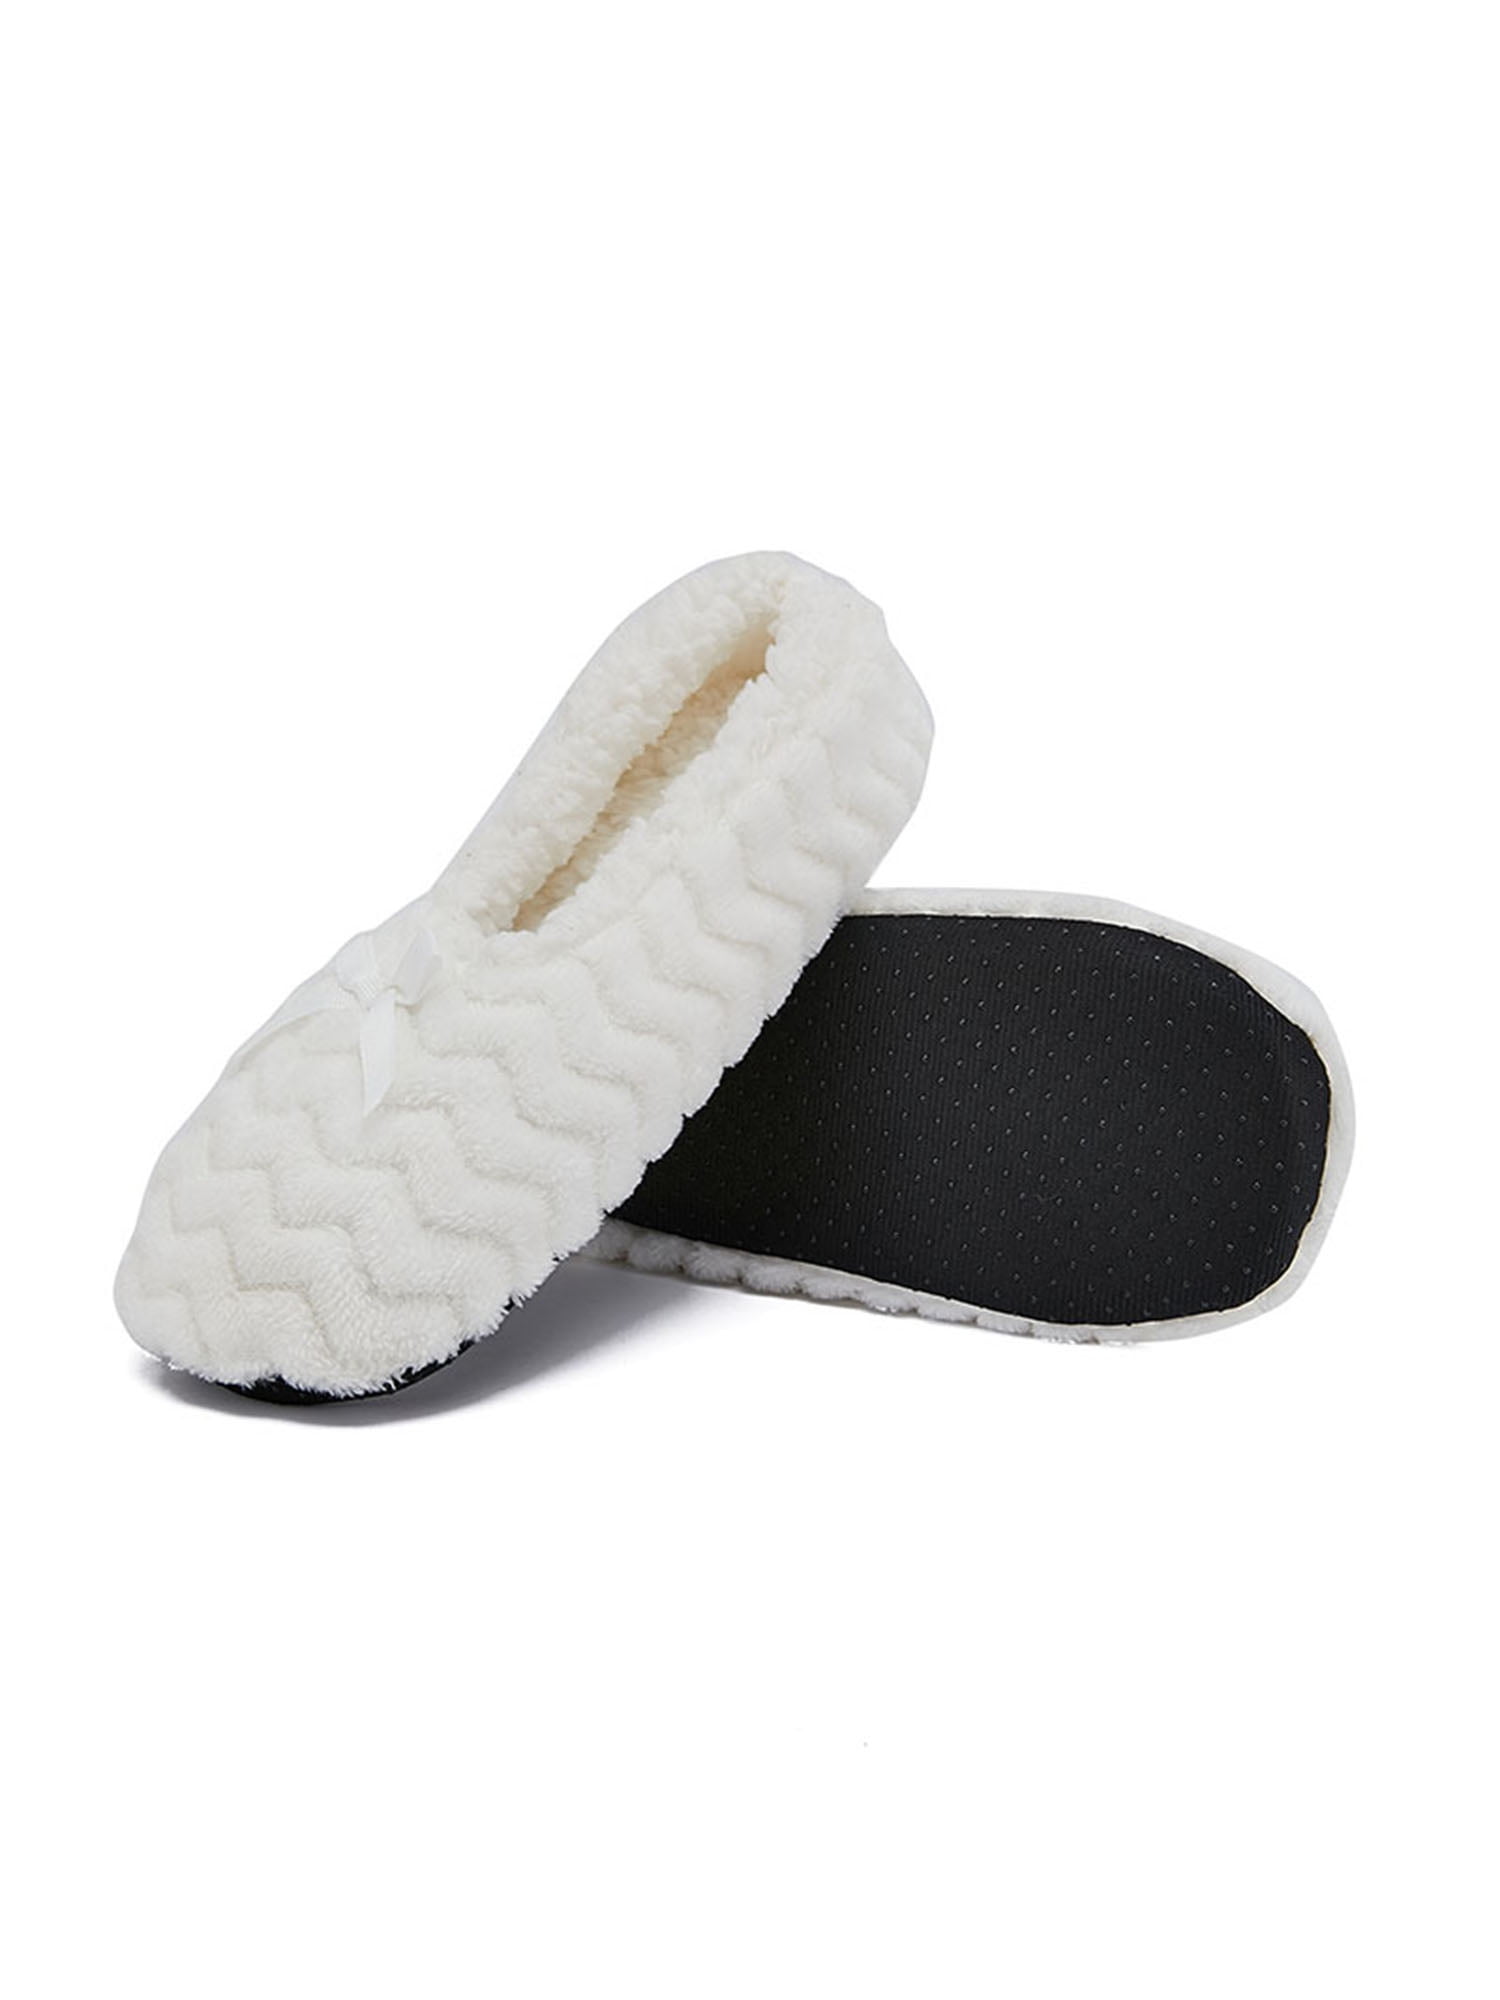 Tenmix Ladies Winter Slipper Soft Plush Warm Shoes Slip On Slippers ...